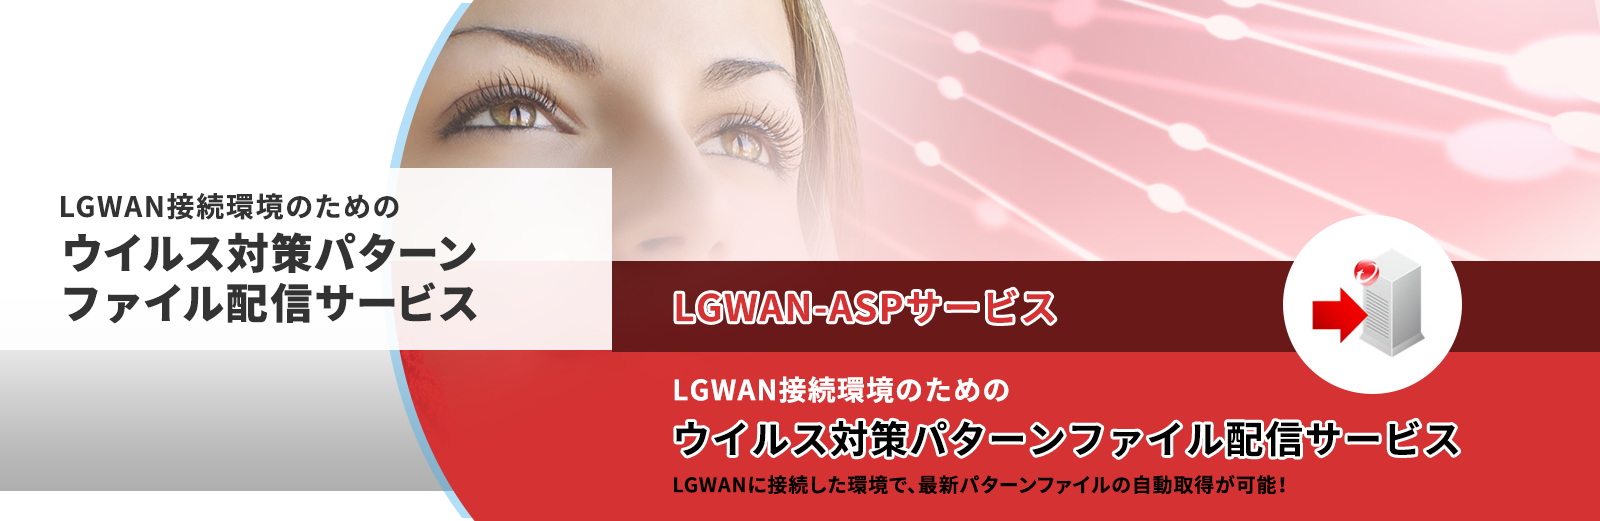 LGWAN-ASP ウイルス対策パターンファイル配信サービス